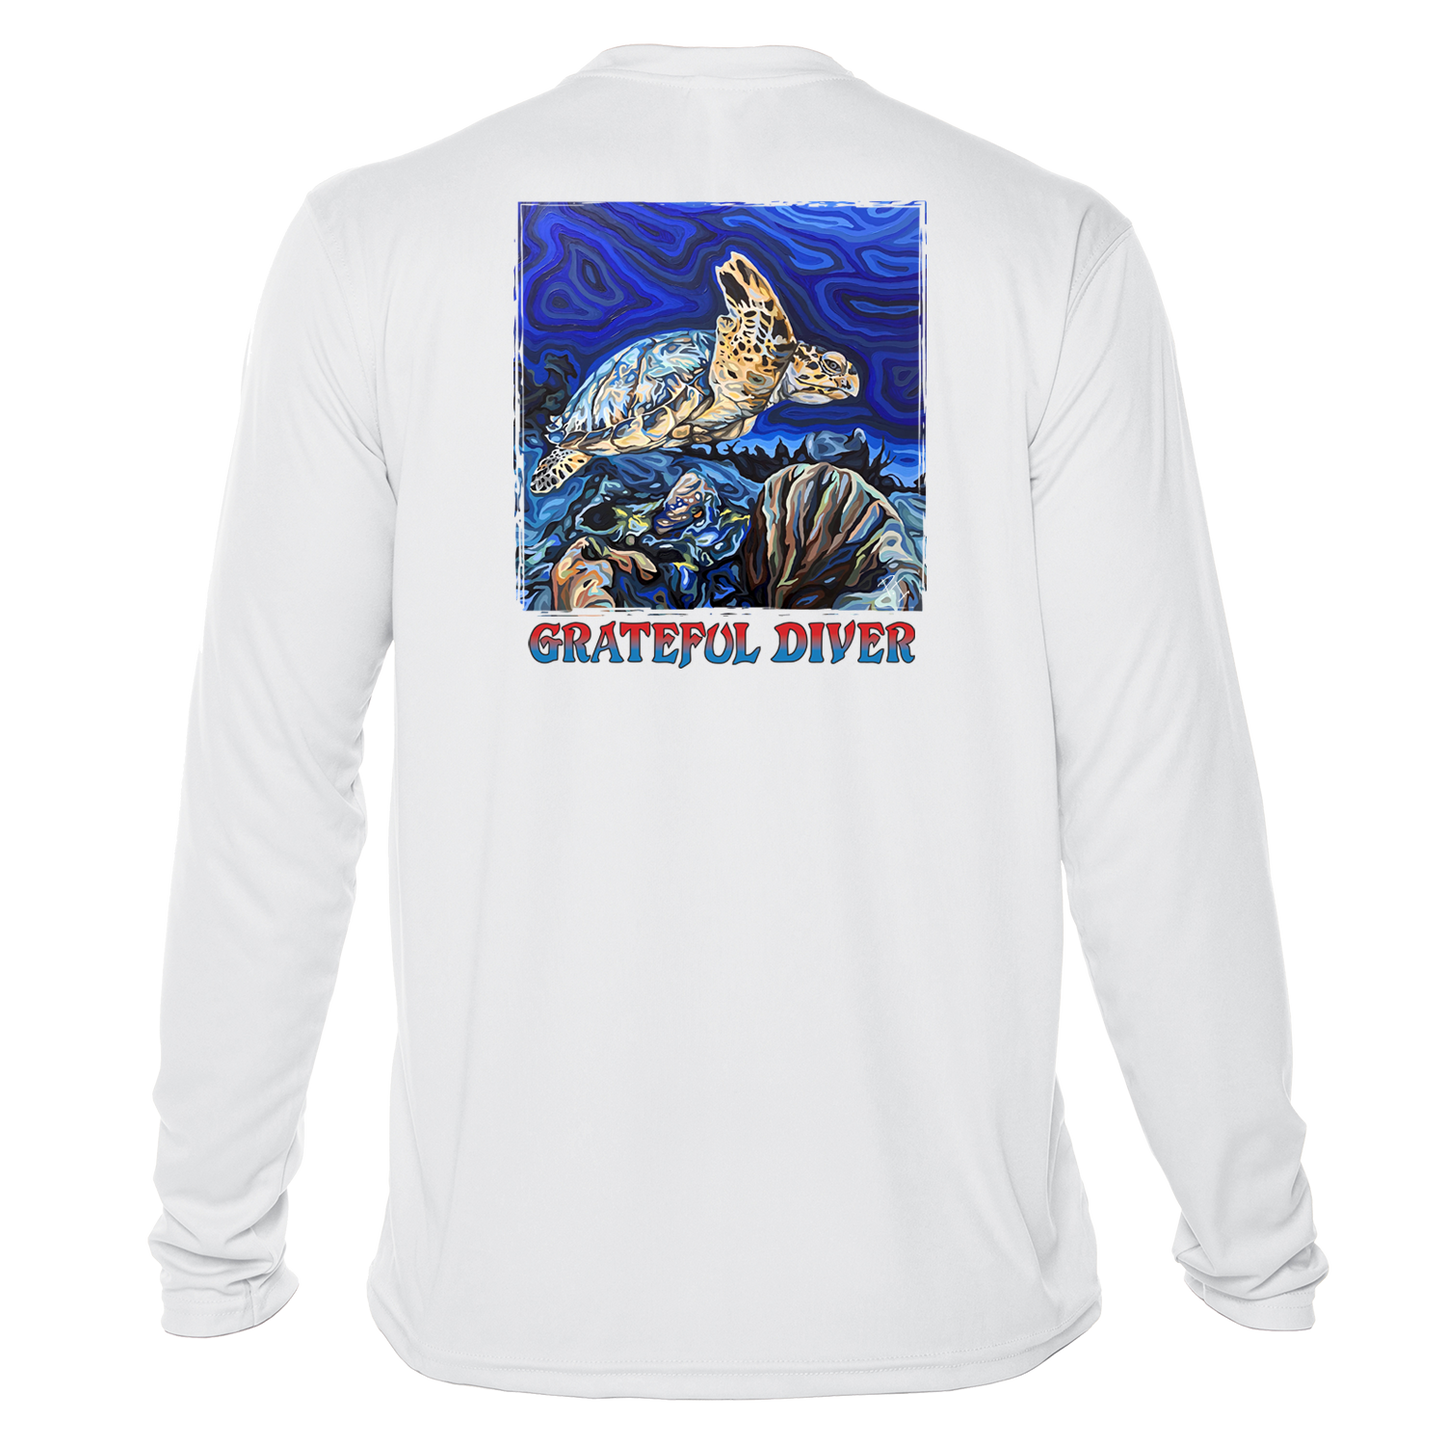 Grateful Diver Artist's Collection by Irina Pushkareva: Hawksbill Turtle UV Shirt in white back shot off figure